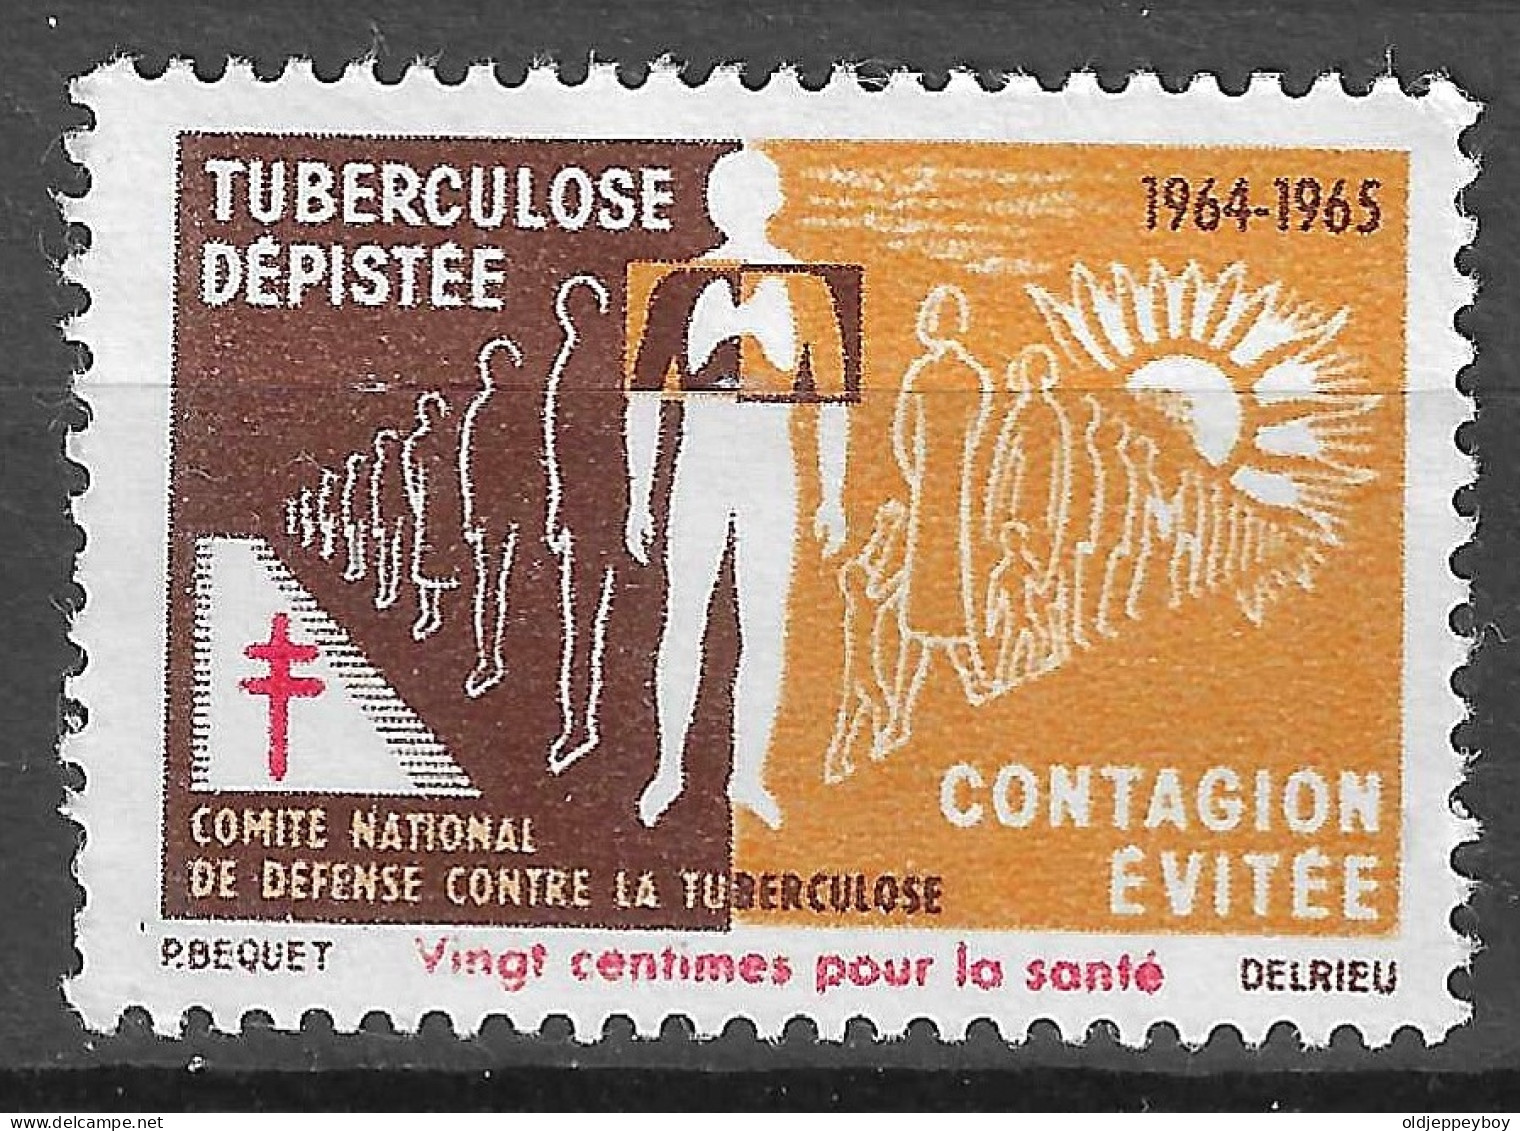 FRANCE 1964-1965 TUBERCULOSE DEPISTEE CONTAGION EVITEE  VIGNETTE Reklamemarke CINDERELLA Erinnophilie - Erinnofilia